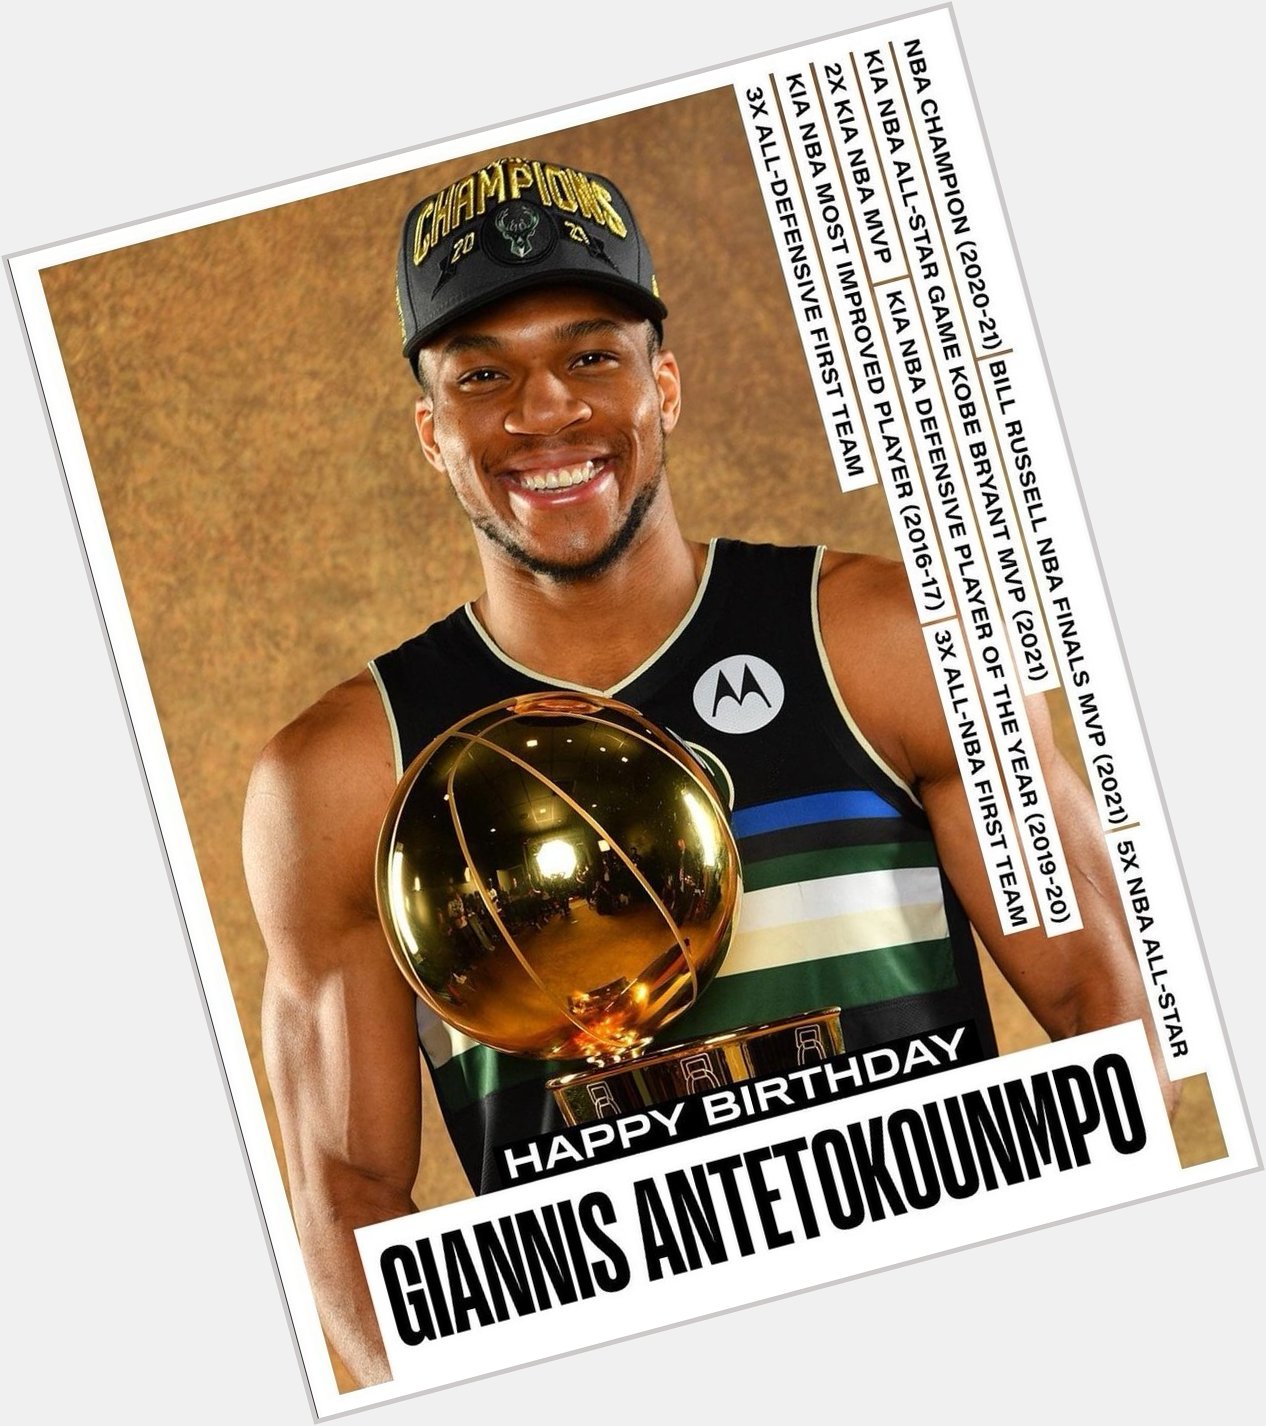 Happy Birthday to Giannis Antetokounmpo!  He is now 27 years old 

(via 